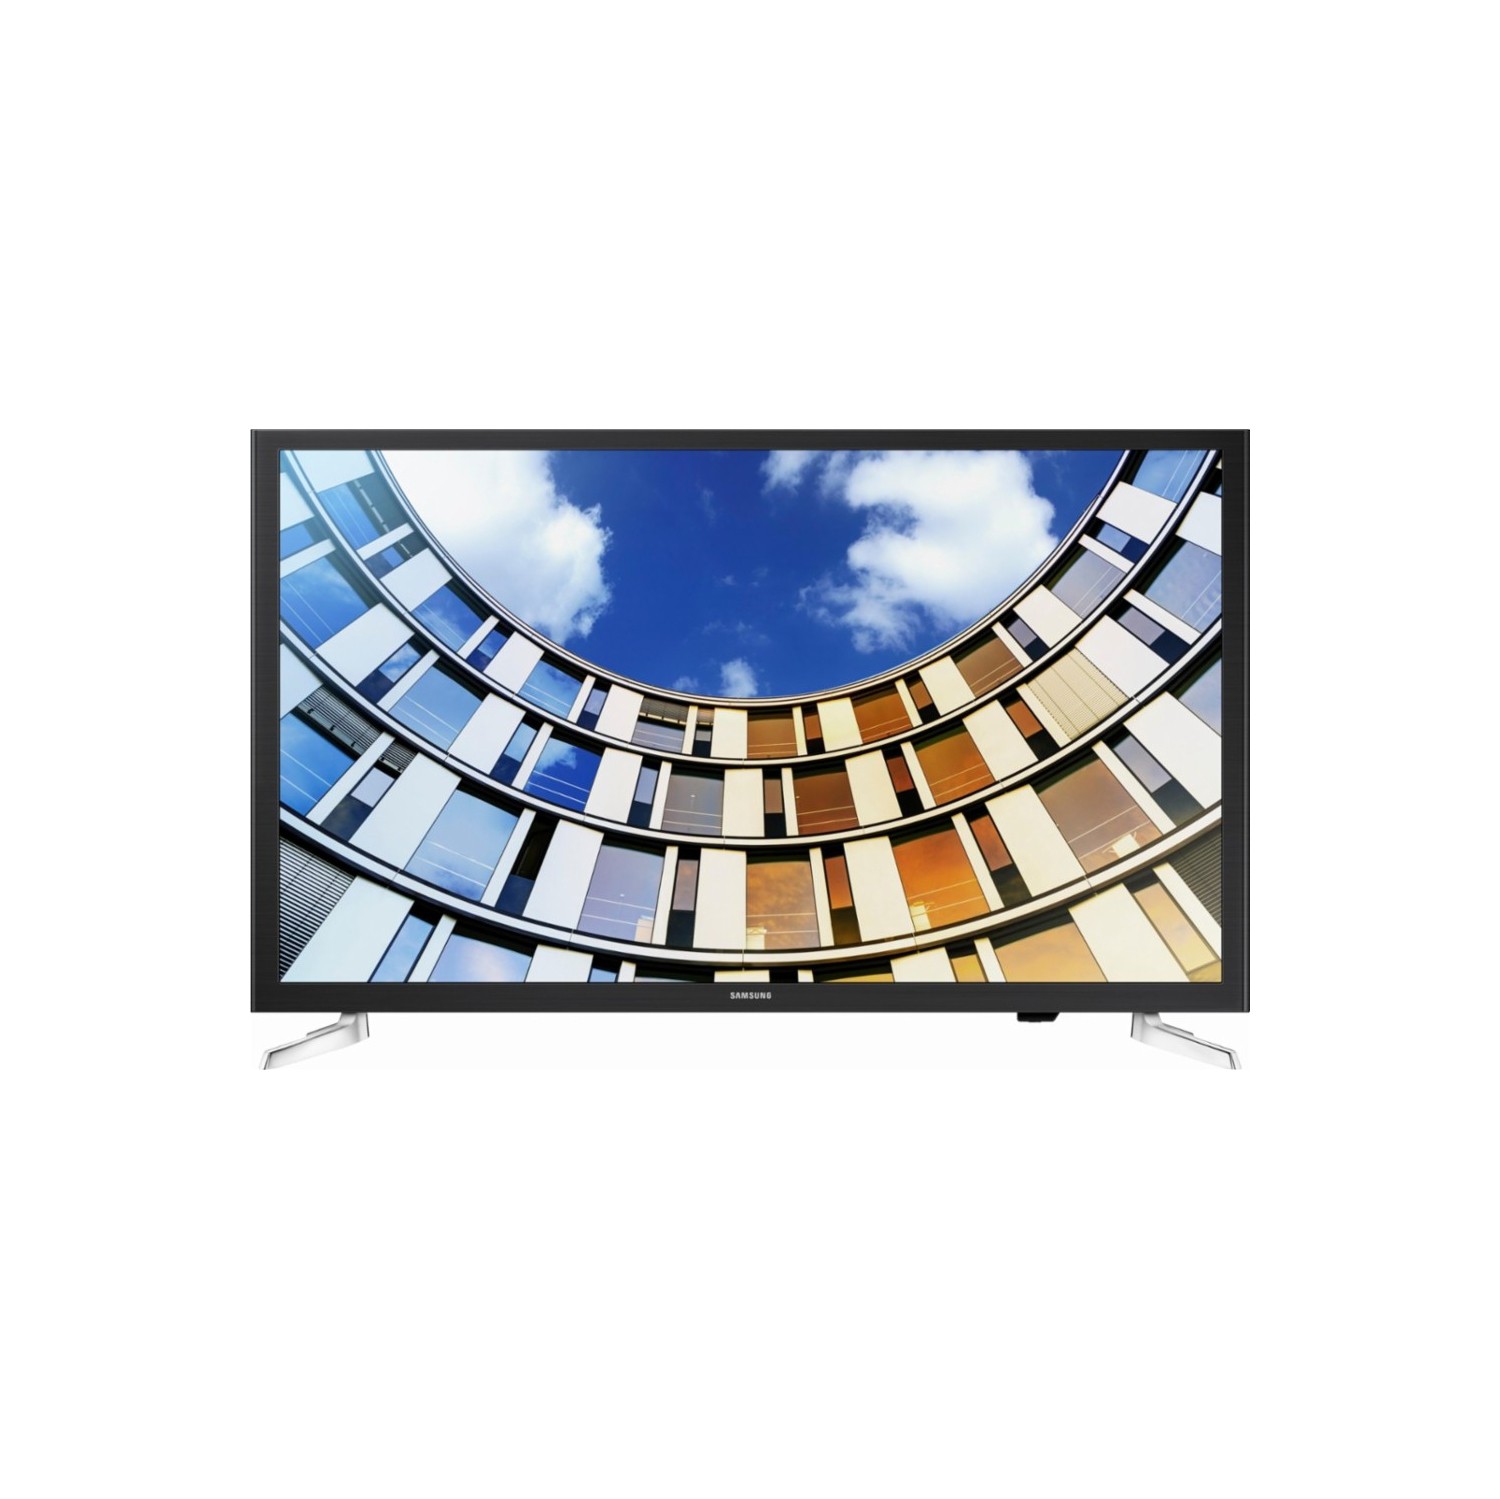 Refurbished Samsung 32" Class FHD (1080p) Smart LED TV (UN32M5300AF)